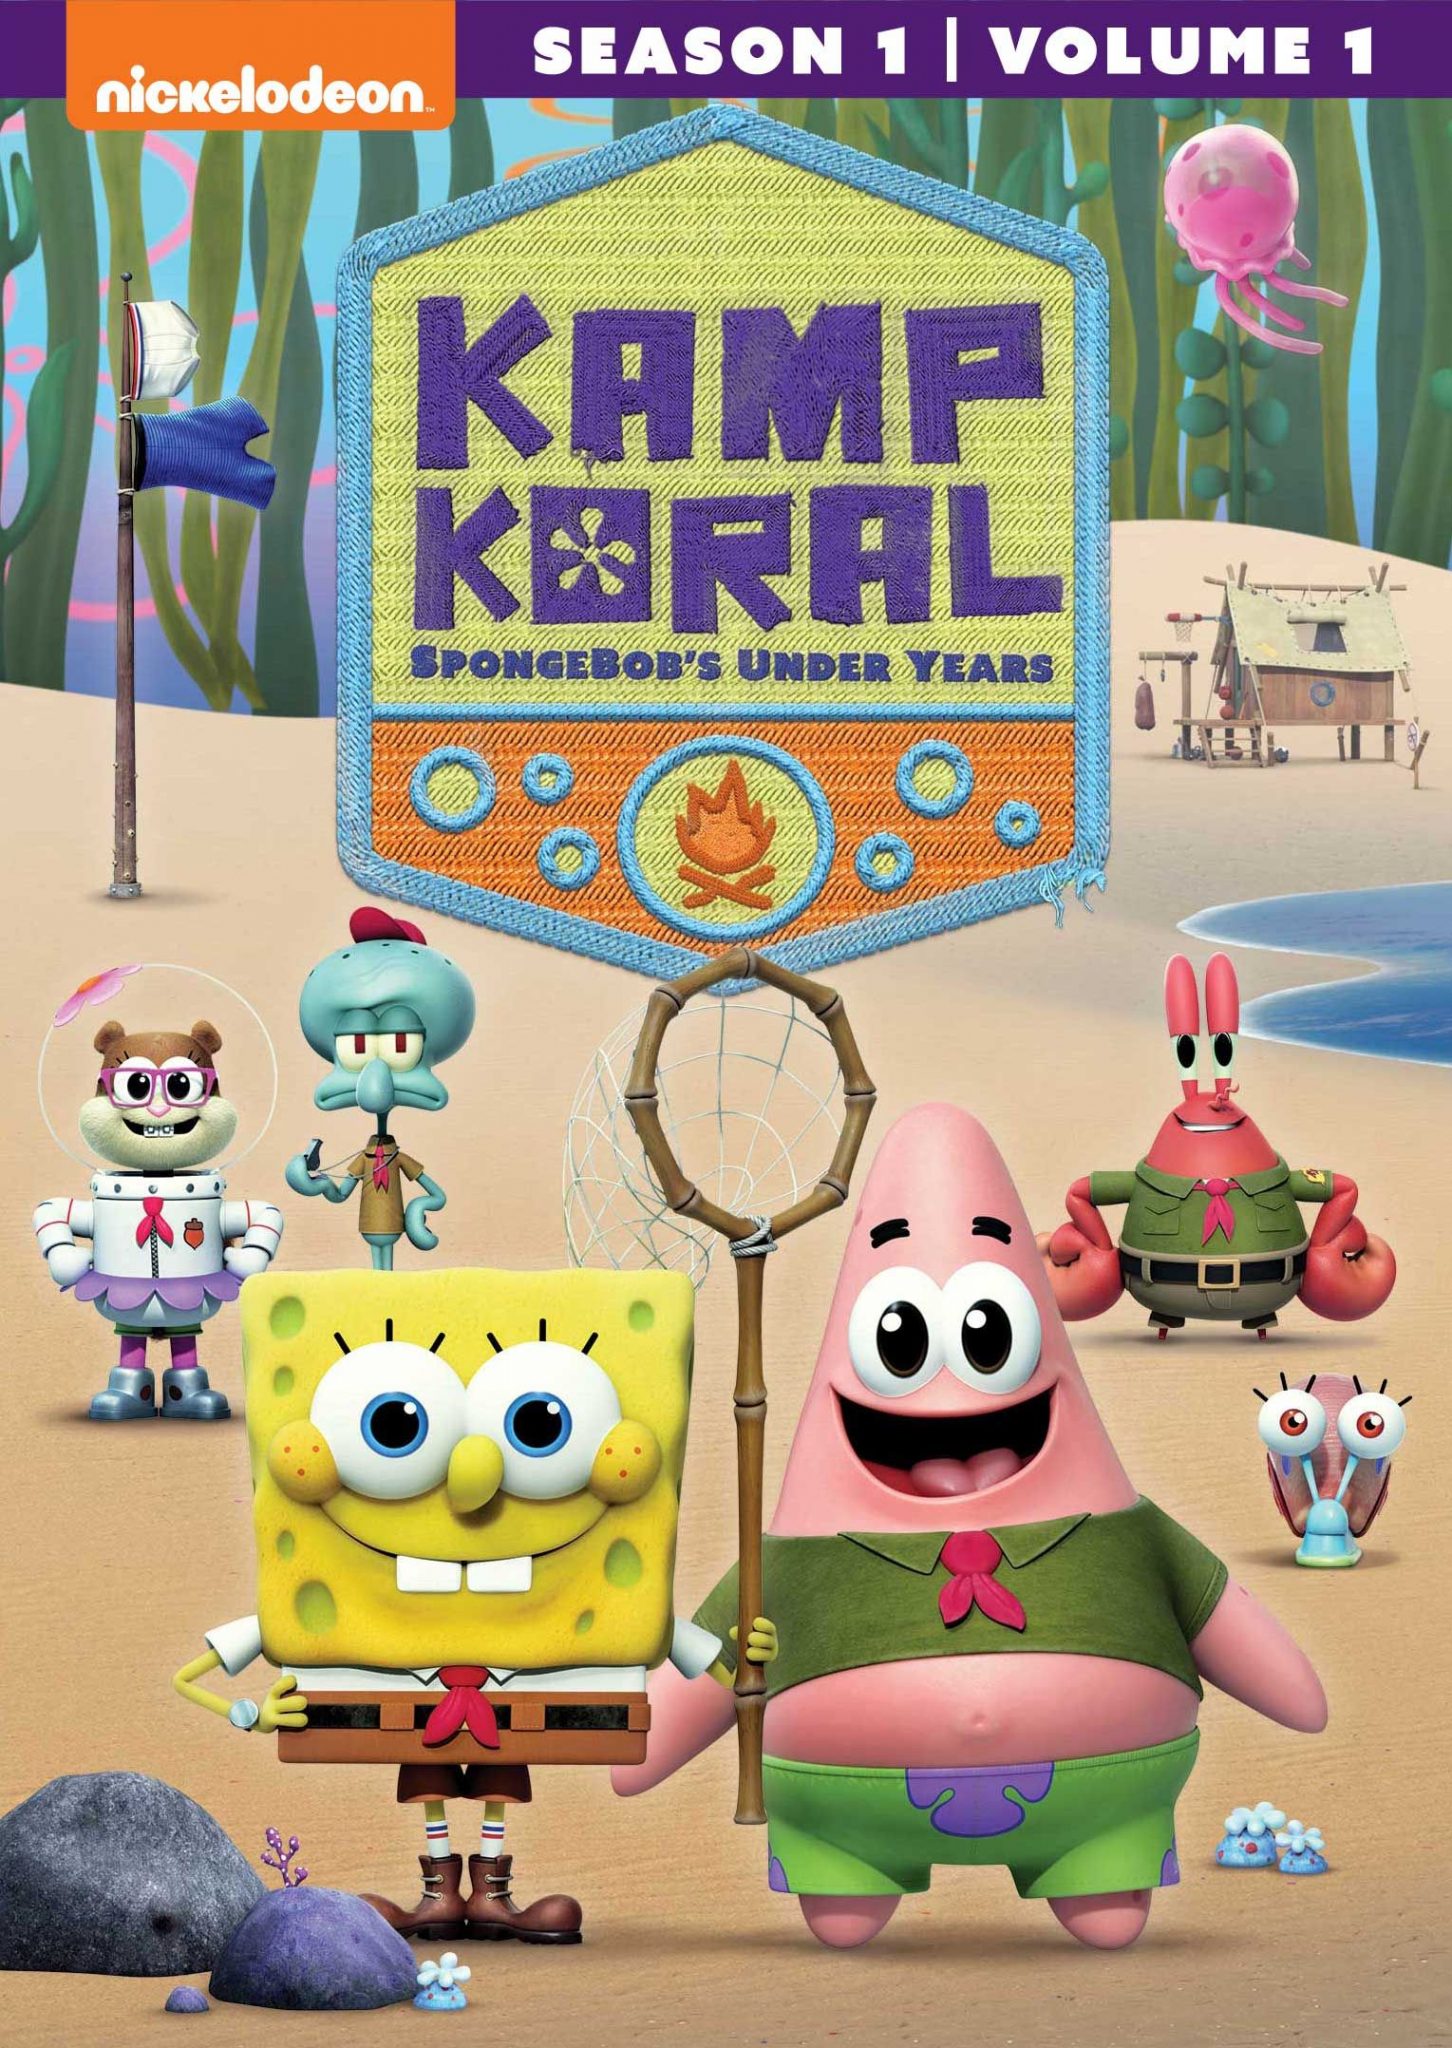 Kamp Koral: Spongebob's Under Years is coming to DVD March 8!